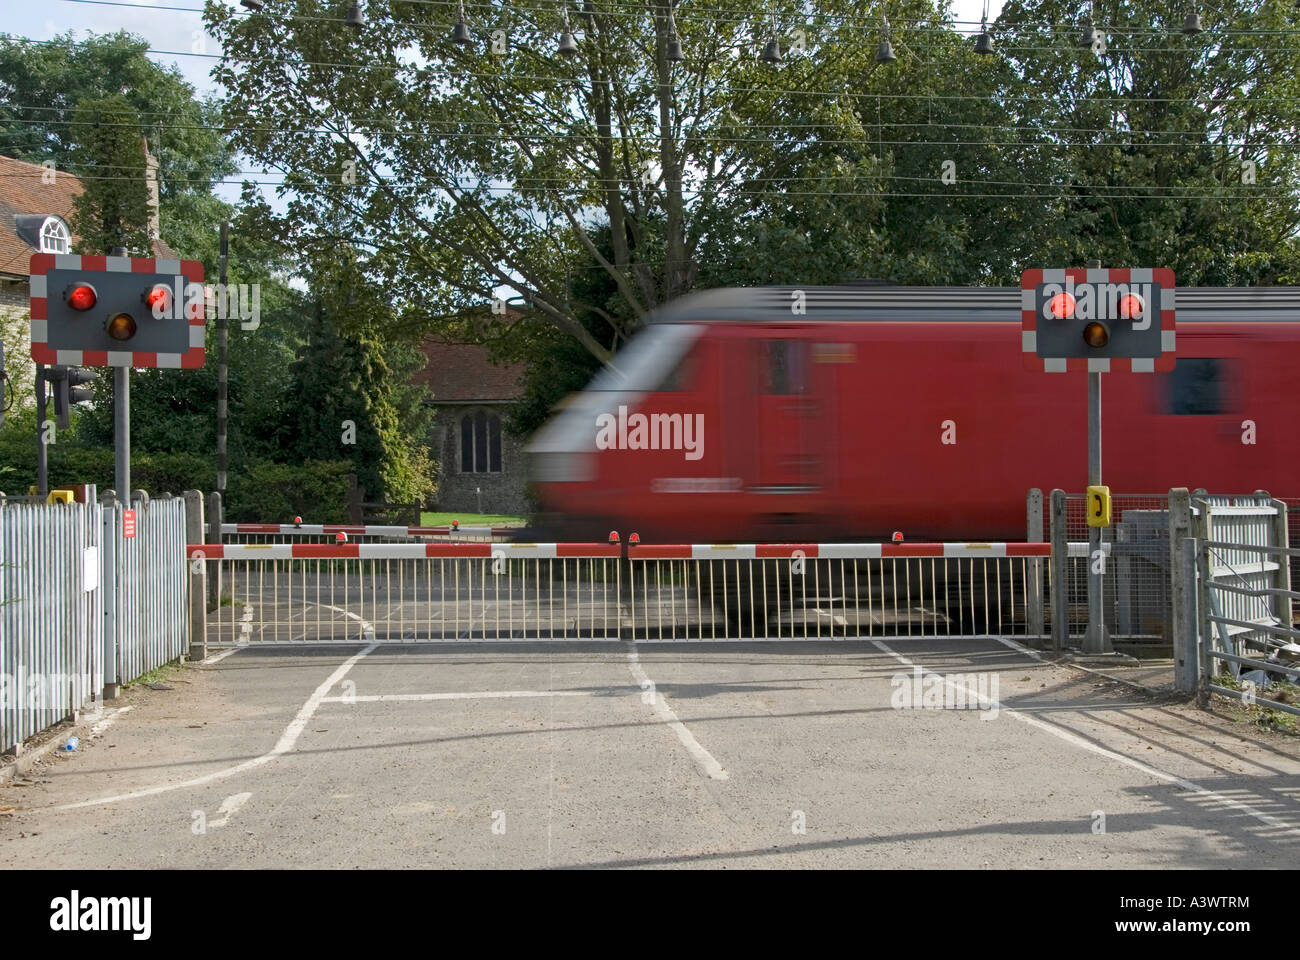 Railway Tracks Red Flashing Warning Light Sign Level Crossing Barrier Stock Photo Alamy